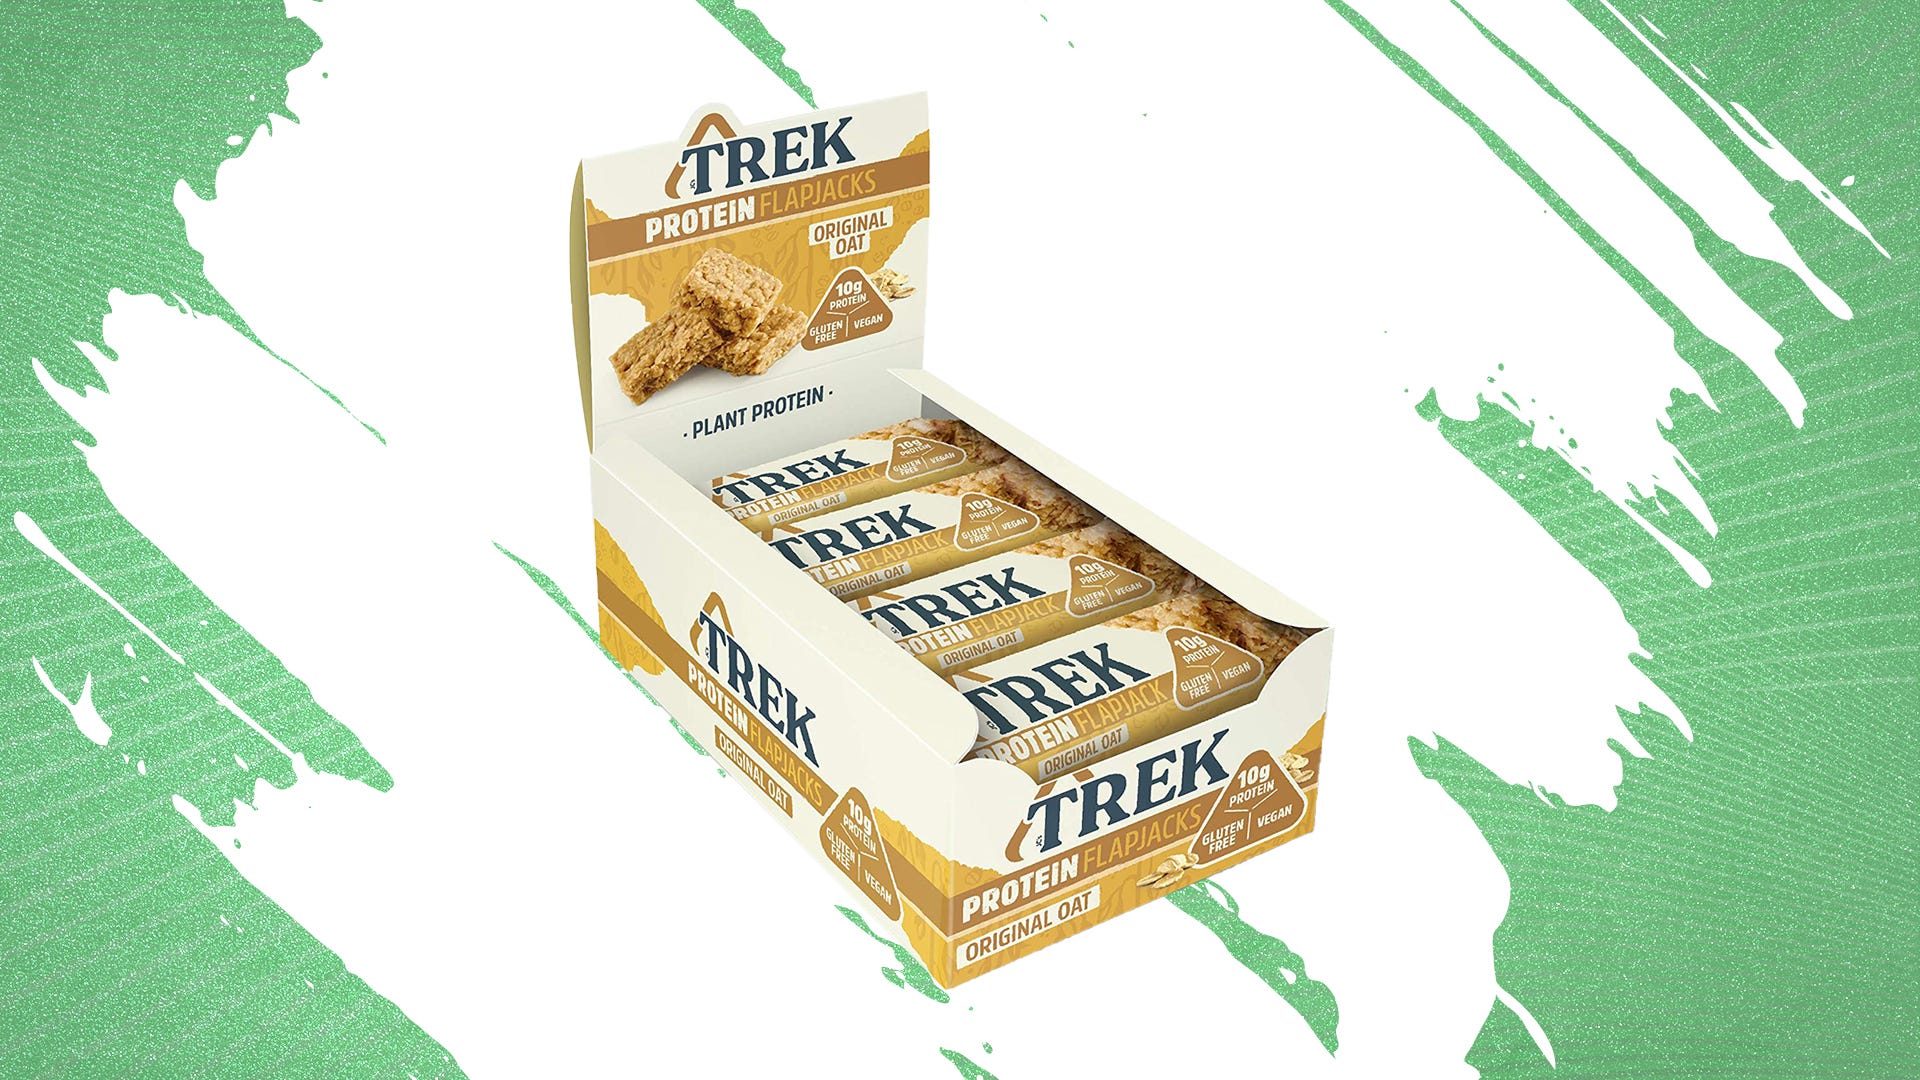 TREK Original Oat high protein flapjack bar (16-pack)